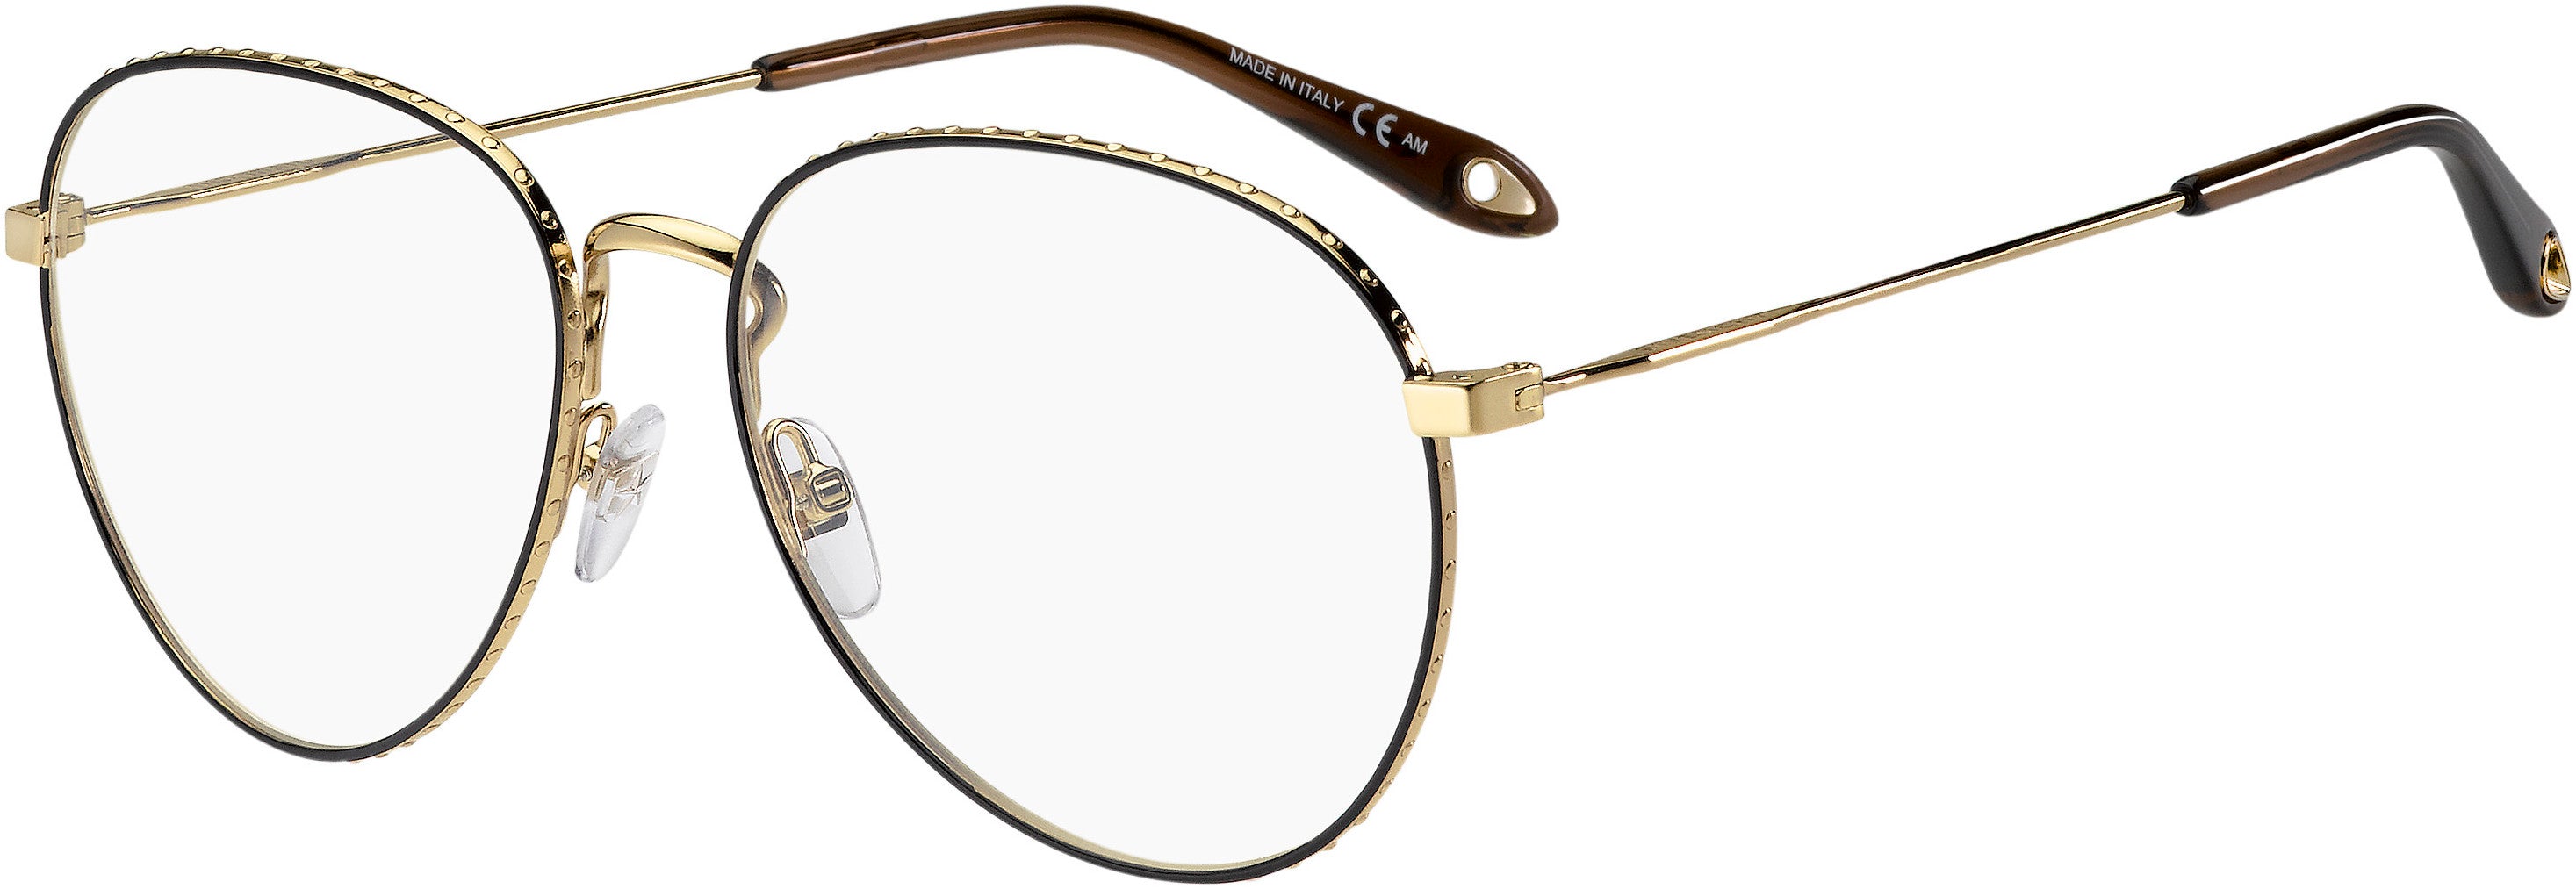  Givenchy 0071 Aviator Eyeglasses 0J5G-0J5G  Gold (00 Demo Lens)